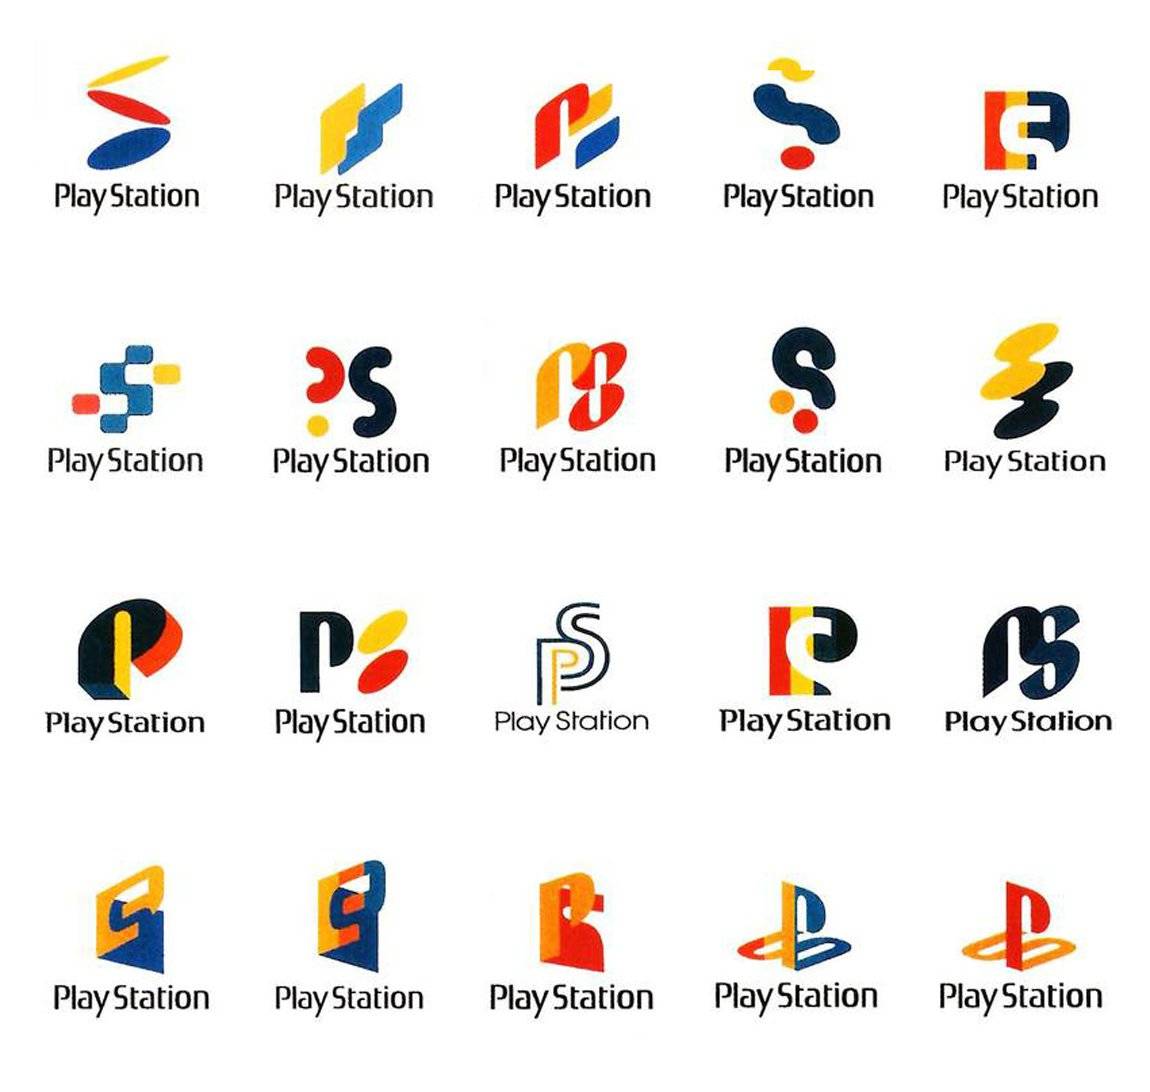 PS Logo - Sony Playstation 1 Logo and Concepts. The Logo Smith